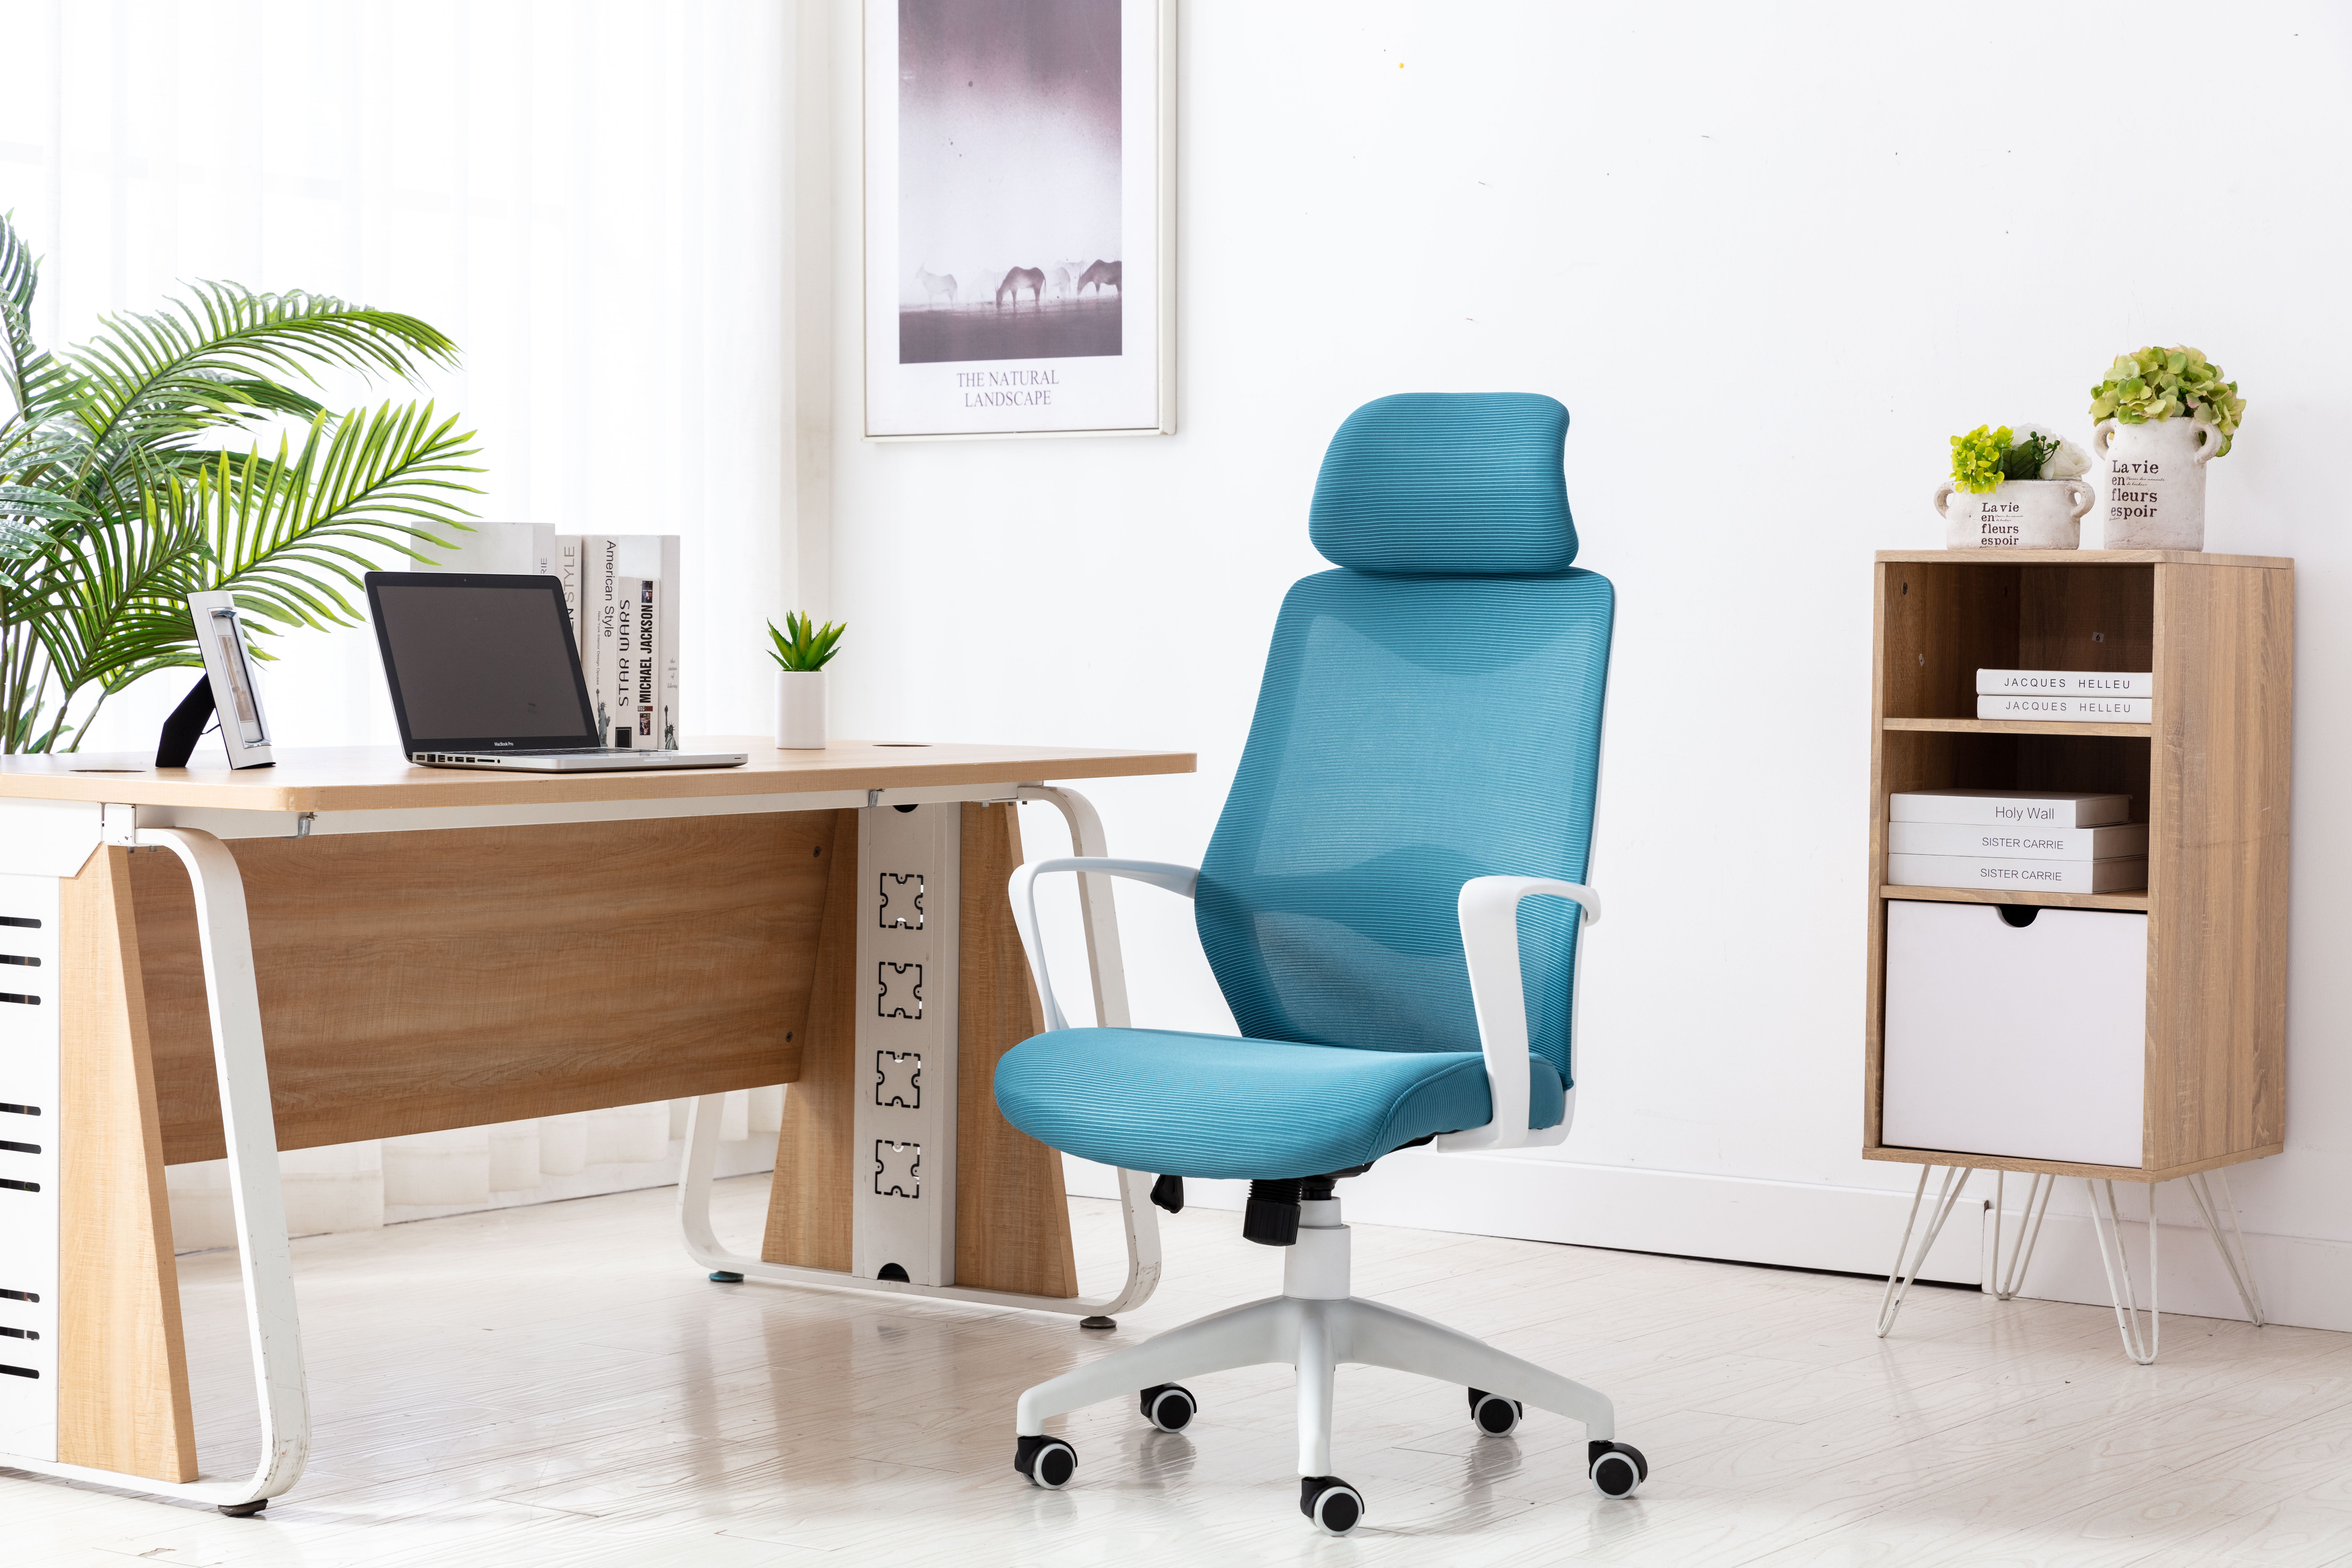 STmeng Mesh Chair Office Ergonomic Adjustable Computer Desk Chair Swivel Tilt High Back with Headrest and Lumbar Support